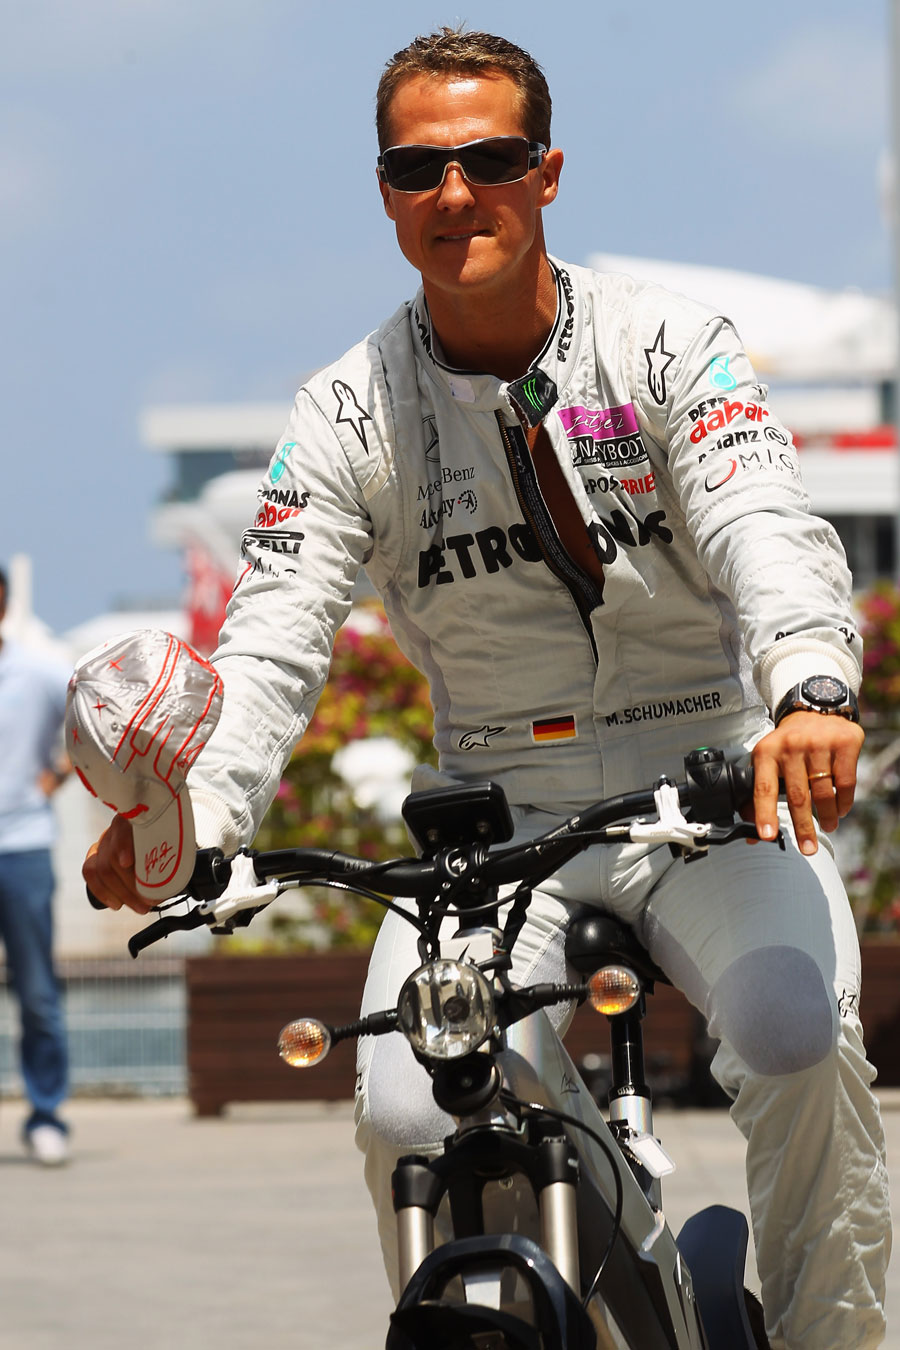 Michael Schumacher rides through the paddock on his bike